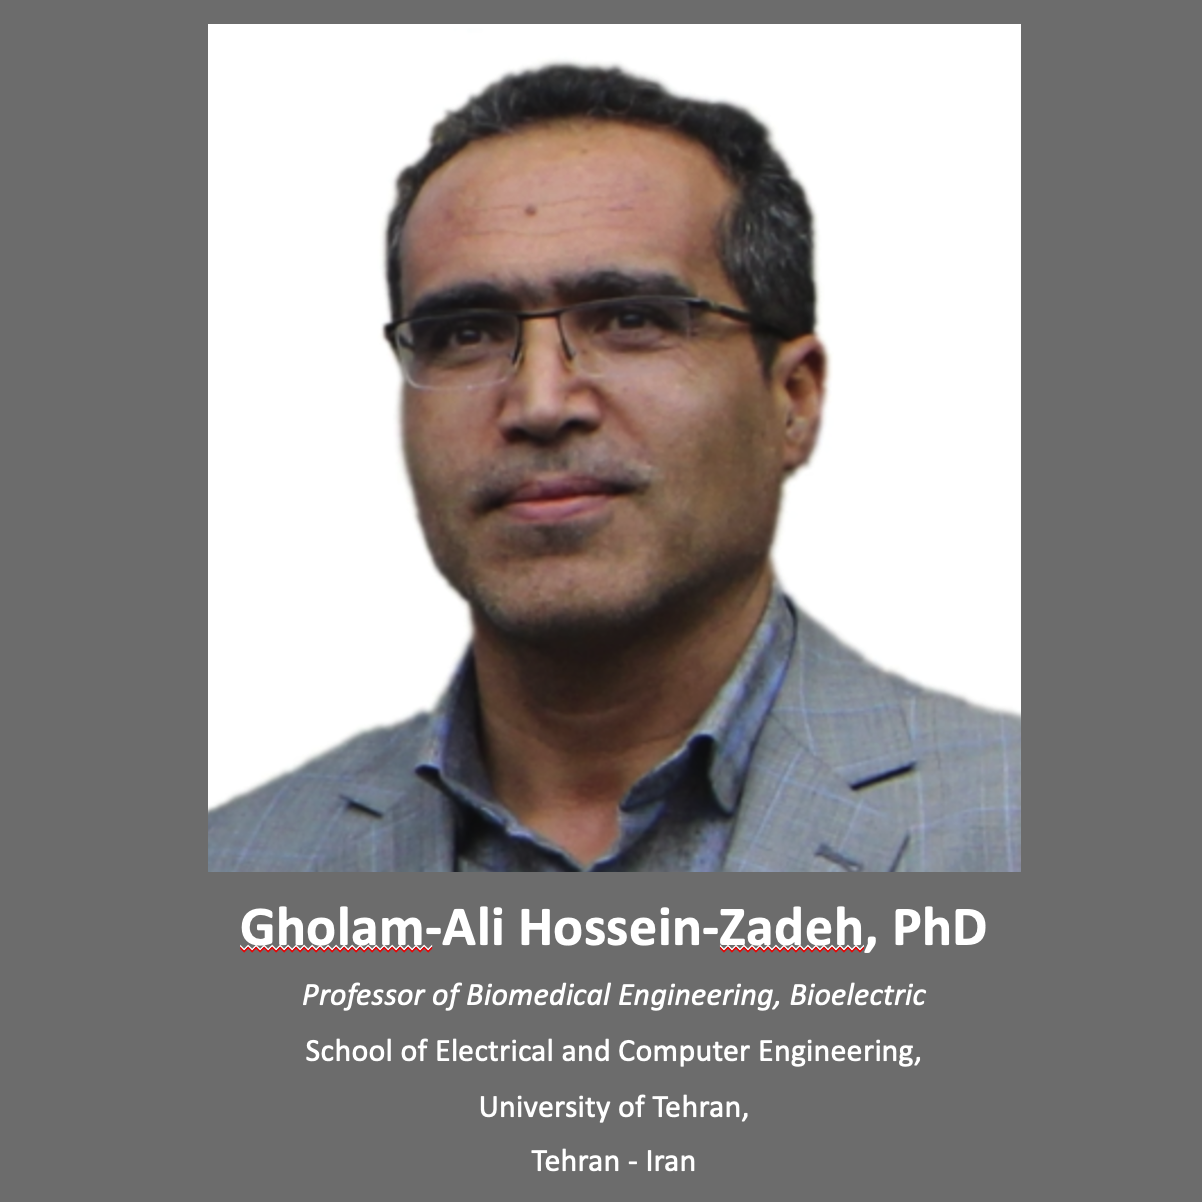 Gholam-Ali Hossein-Zadeh